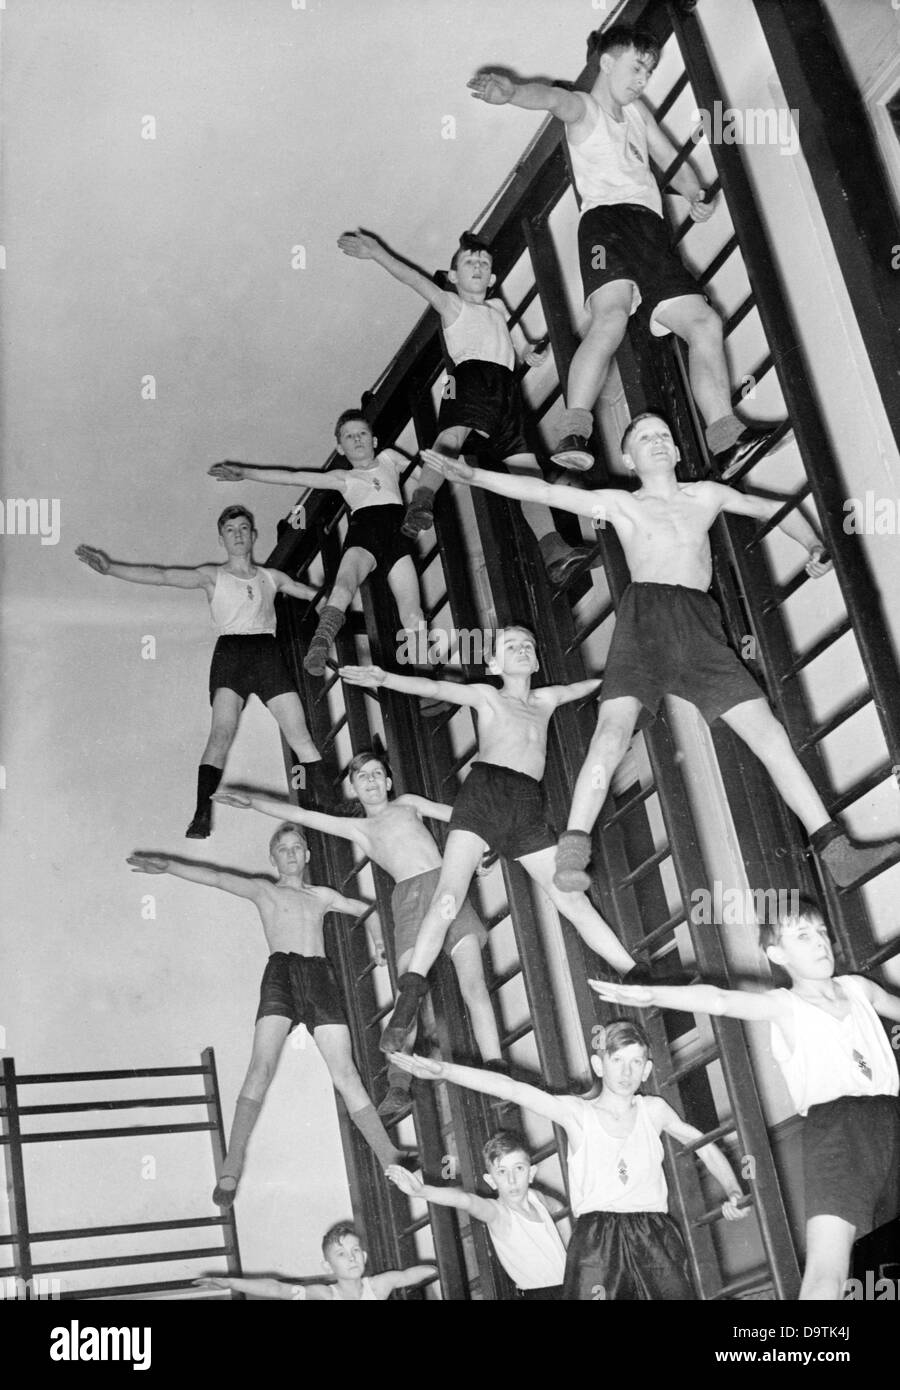 Hitler Youth boys of the German Youth present their skills on the ladders, in December 1937. Fotoarchiv für Zeitgeschichte Stock Photo